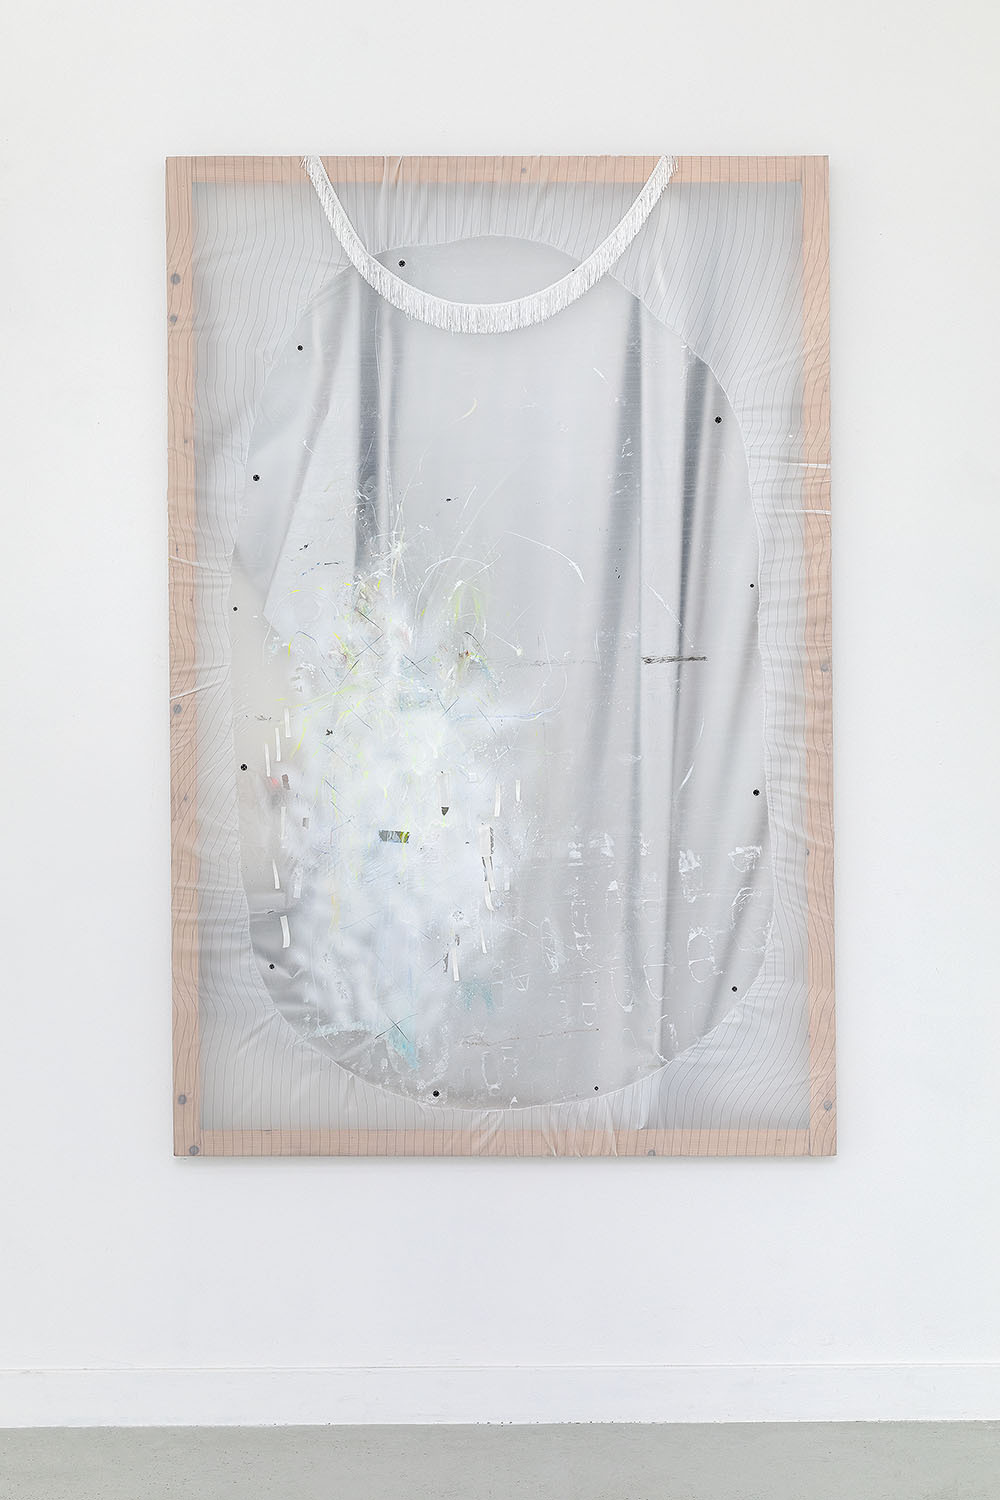 Mathilde Ganancia, Une artificier en prison, 2020, mixed media, 170 x 115 cm